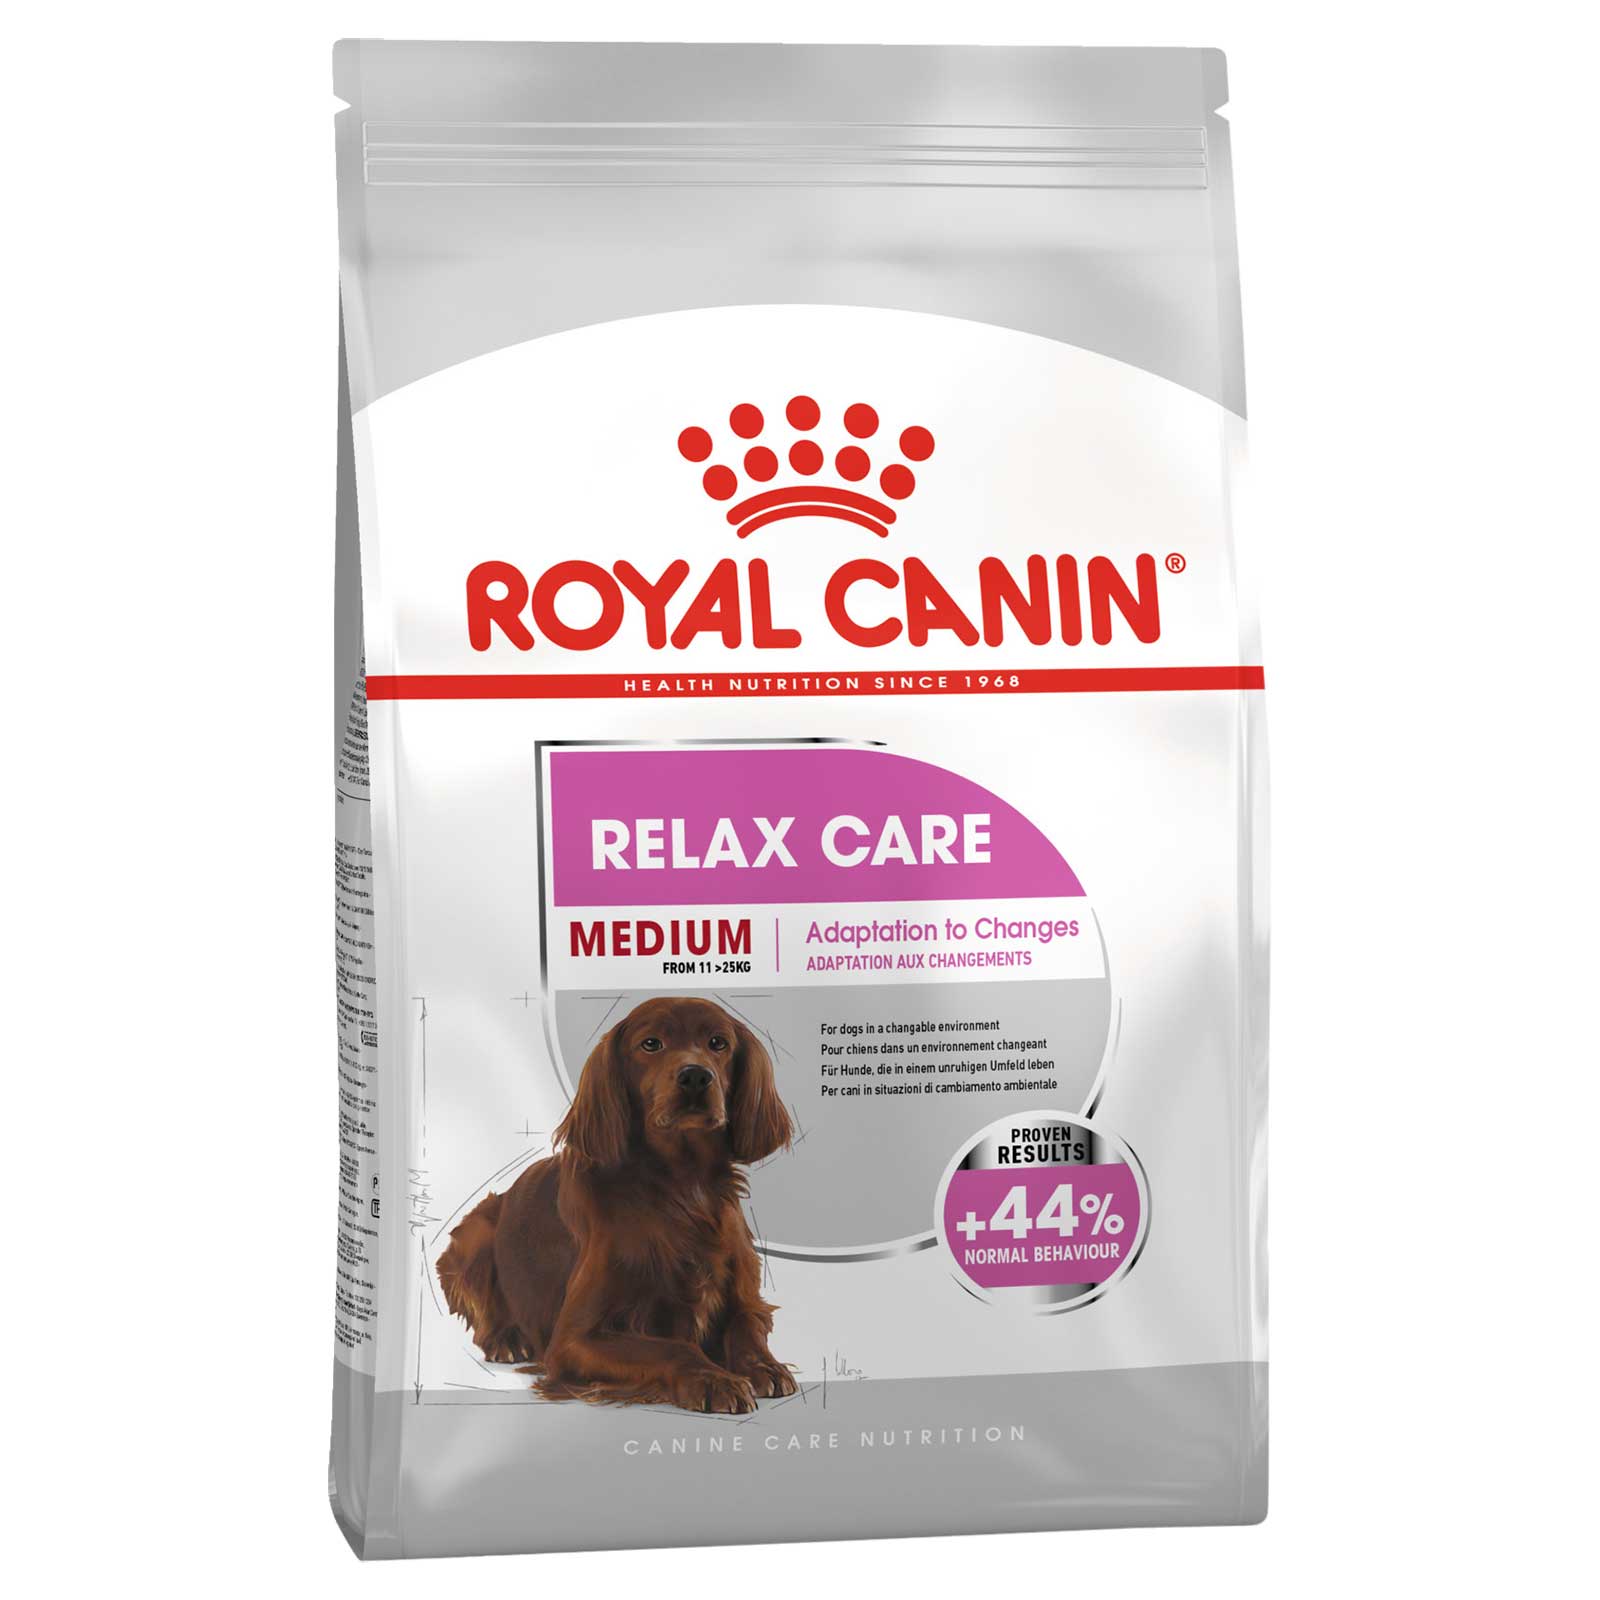 Royal Canin Dog Food Relax Care Medium